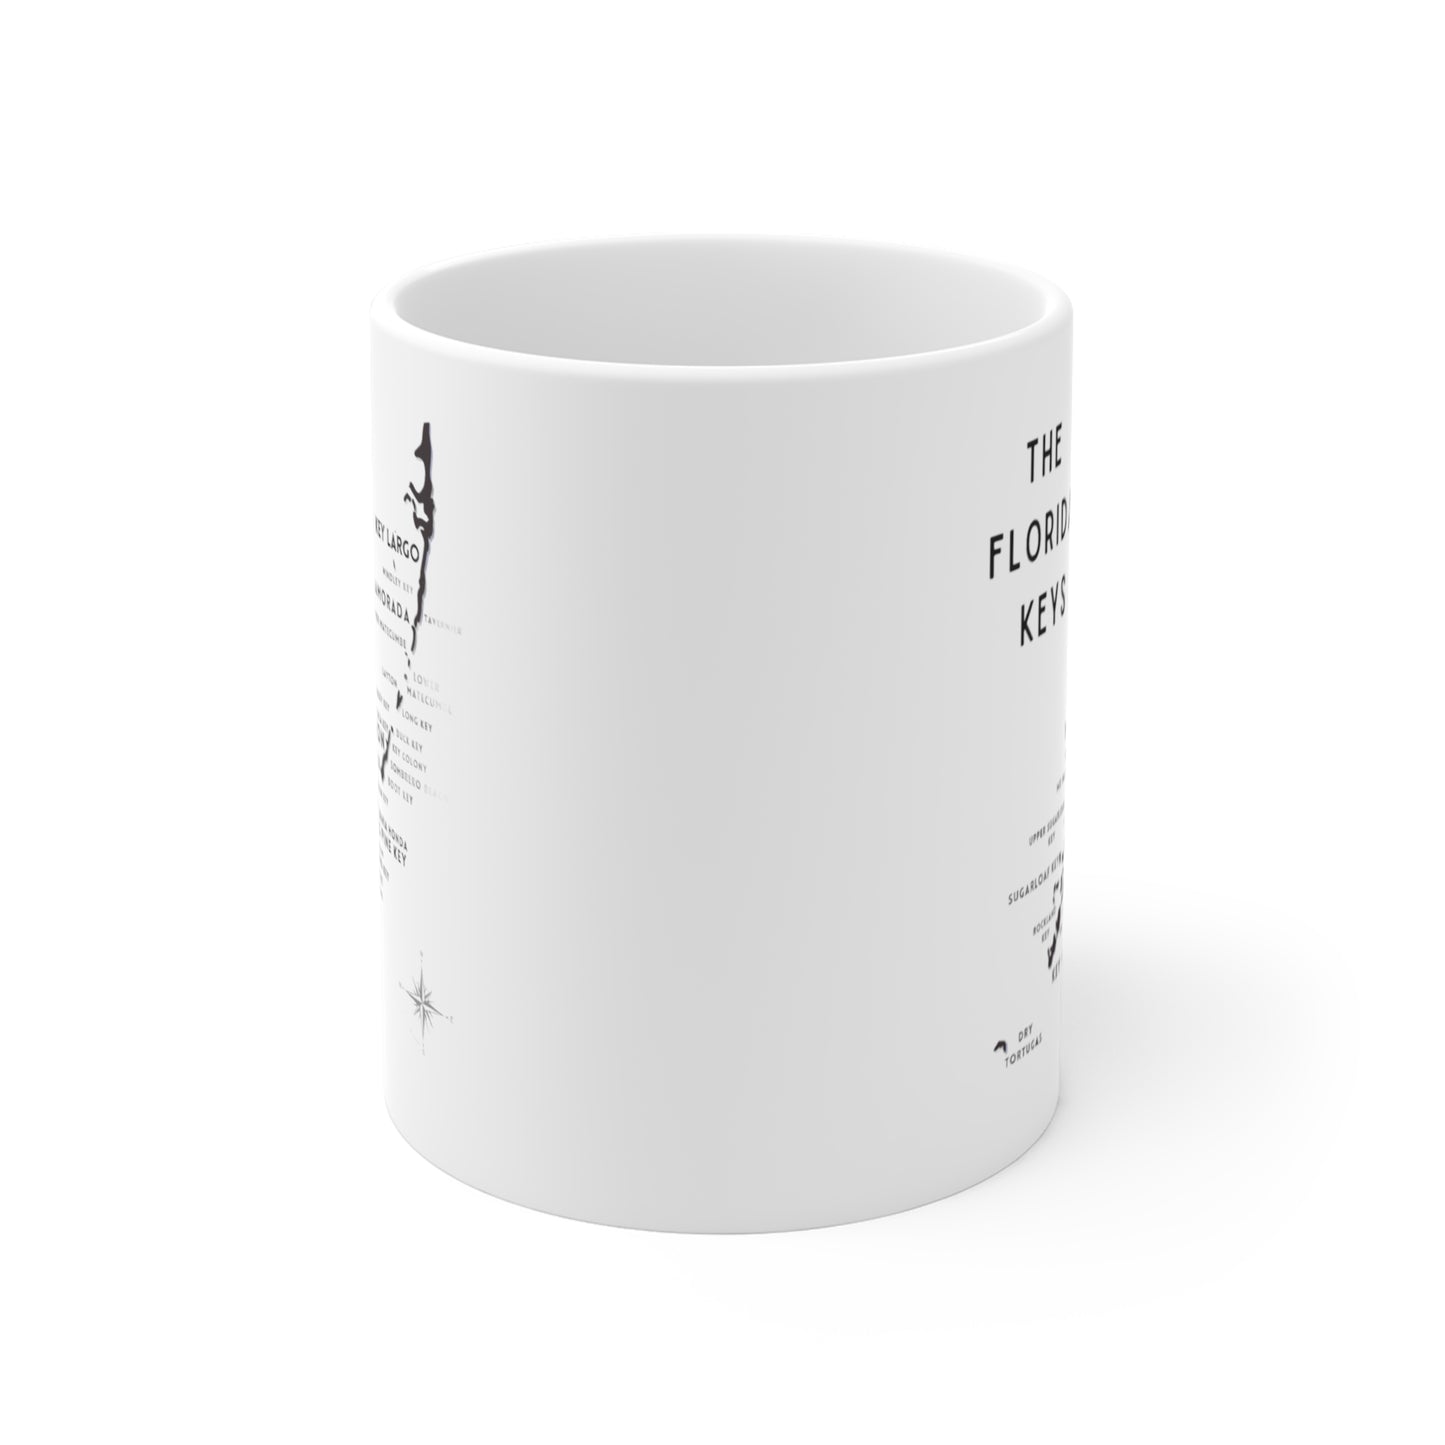 Florida Keys Map - coffee mug